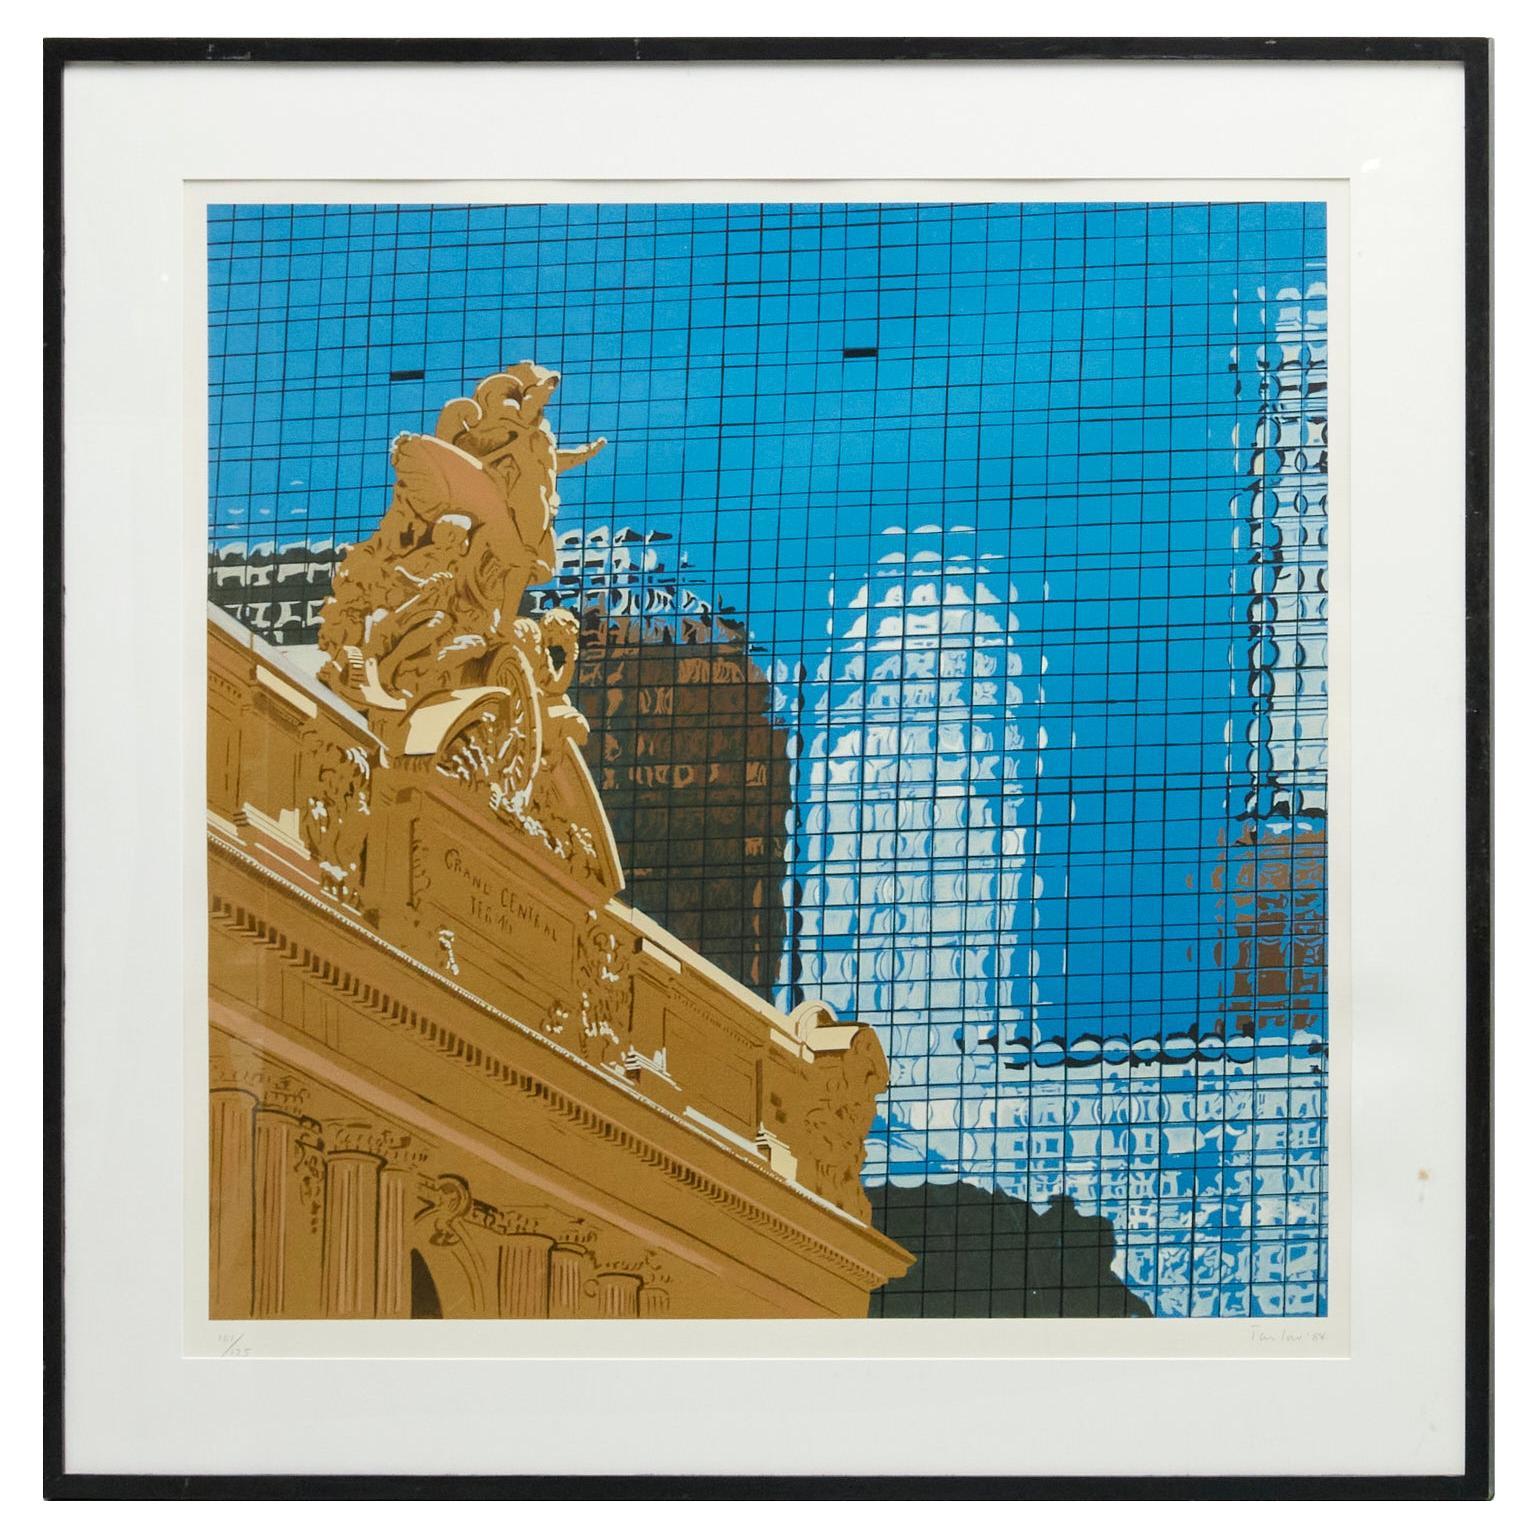 Grande lithographie de Philip Tarlow encadrée de 1984 de la Grand Central Station, NYC